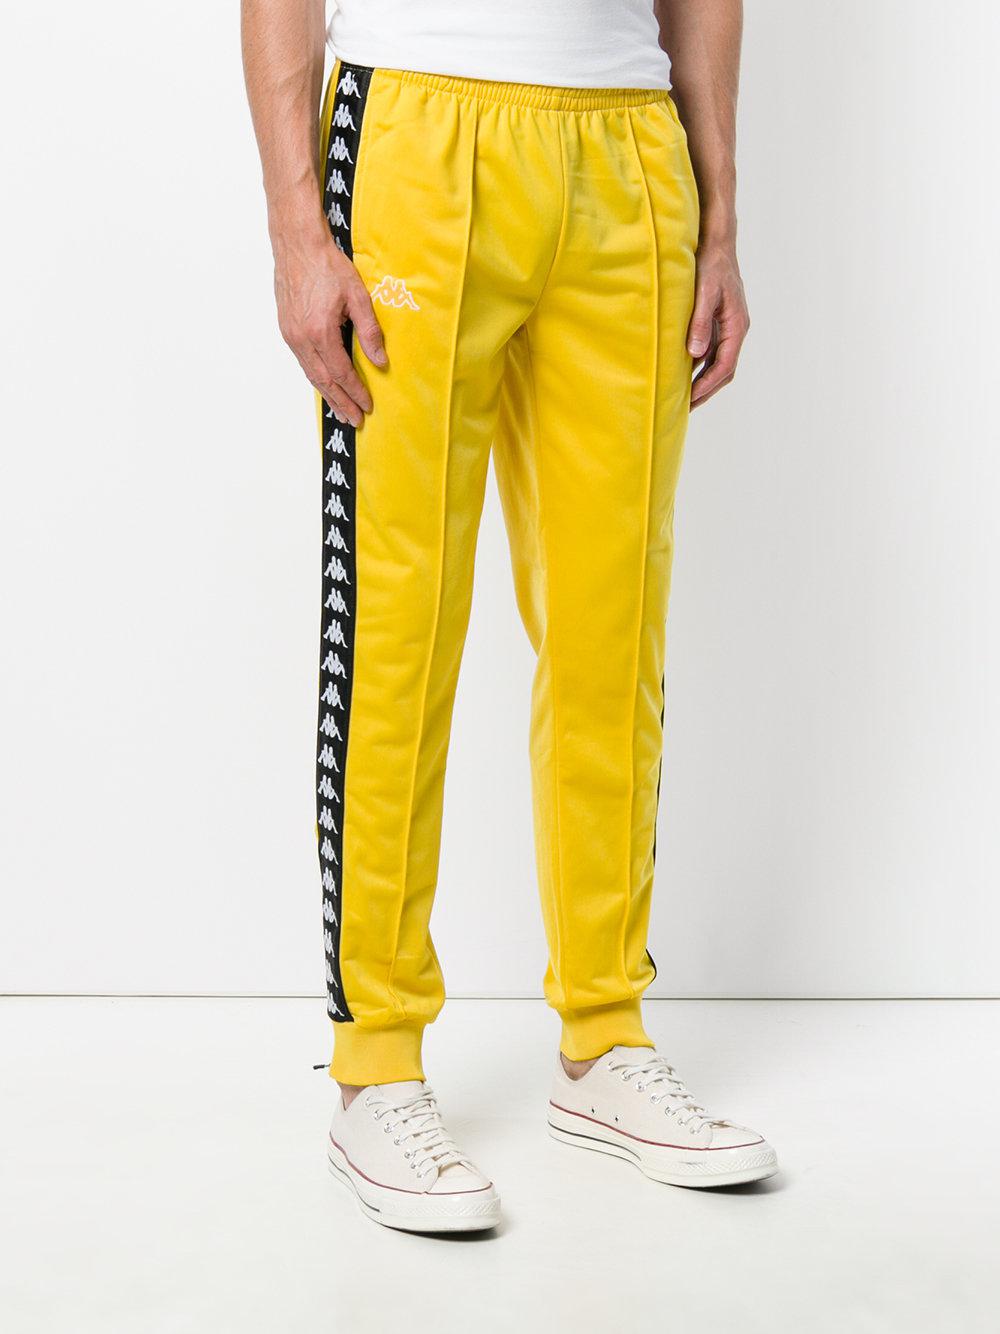 Kappa Side Stripe Track Pants in Yellow & Orange (Yellow) for Men - Lyst